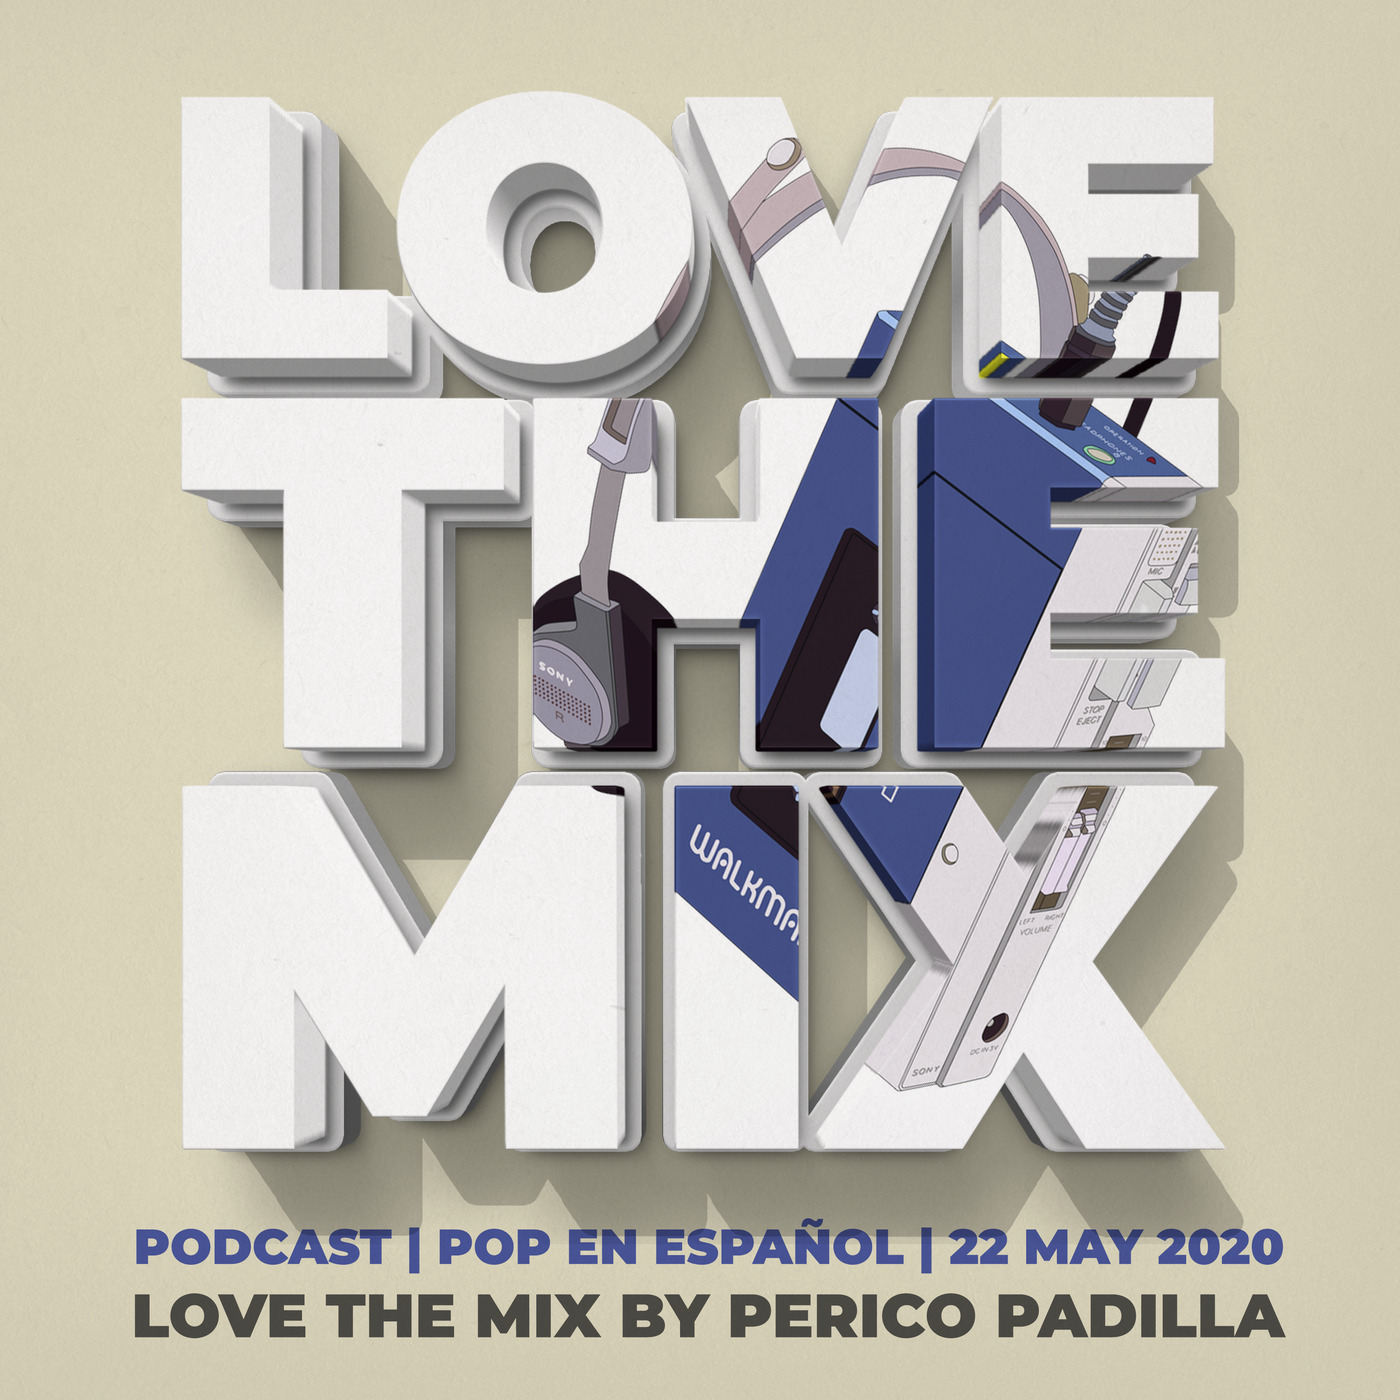 LOVE THE MIX PODCAST | POP EN ESPAÑOL | 13 JUN 2020 By Perico Padilla